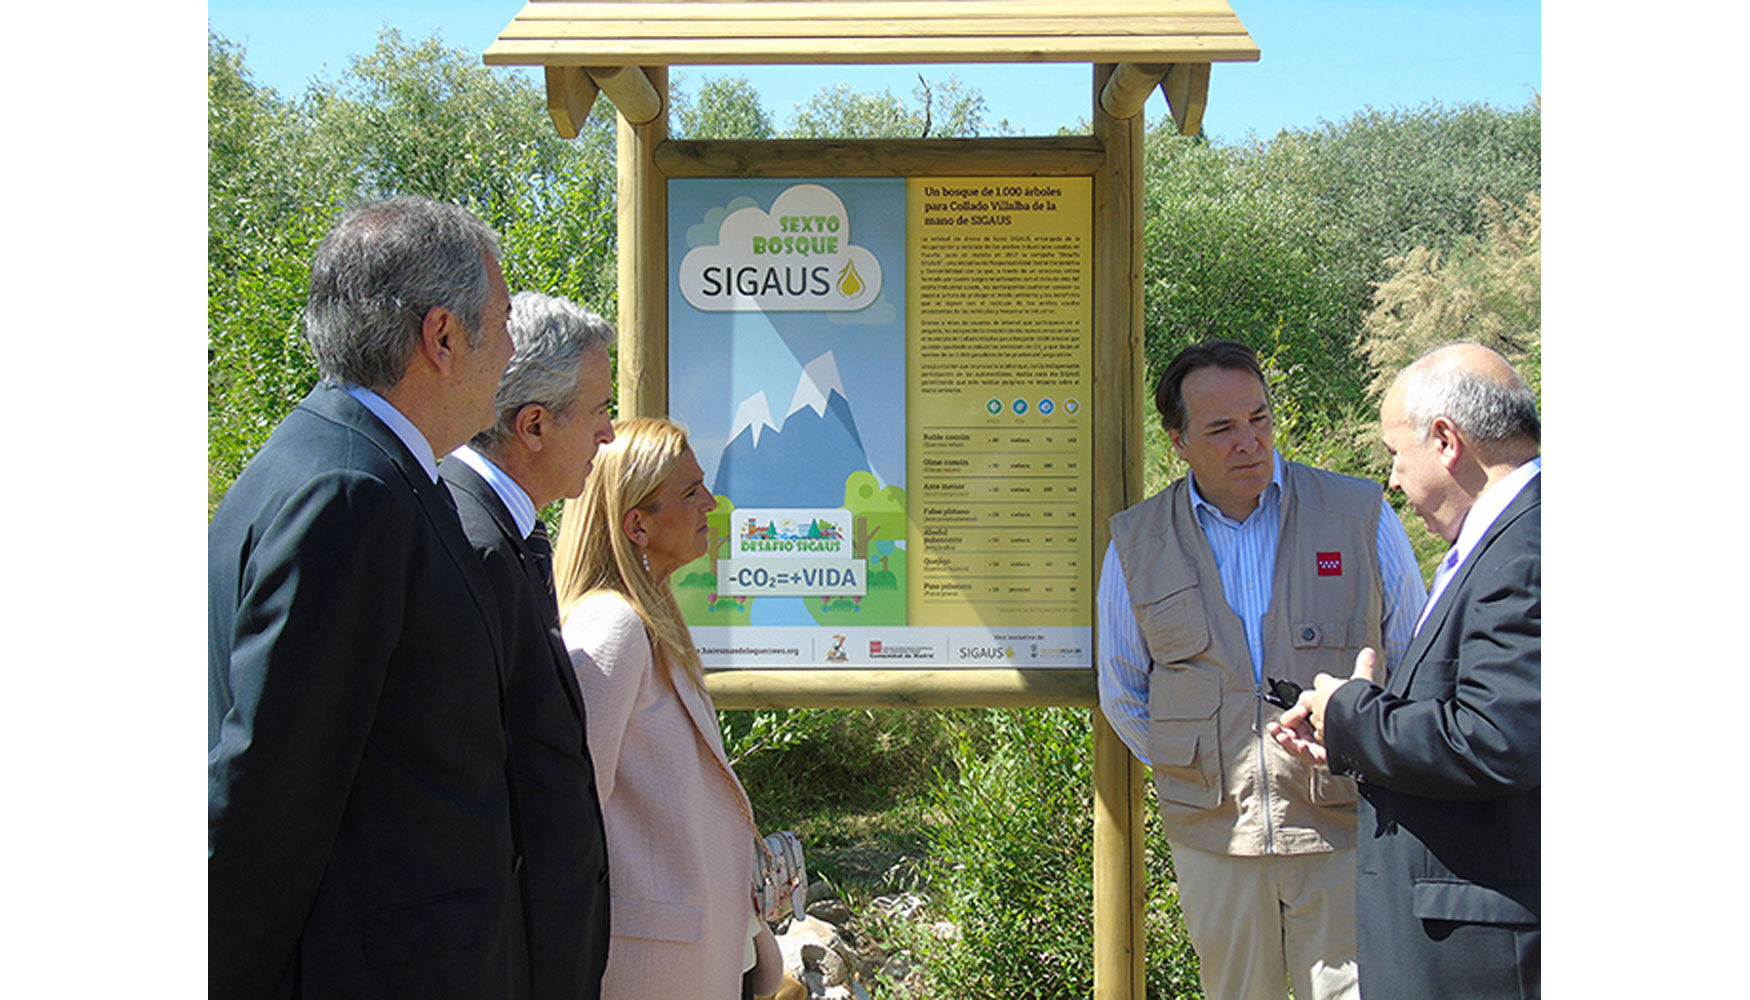 Inauguracin del 'Sexto Bosque Sigaus' en Collado Villalba